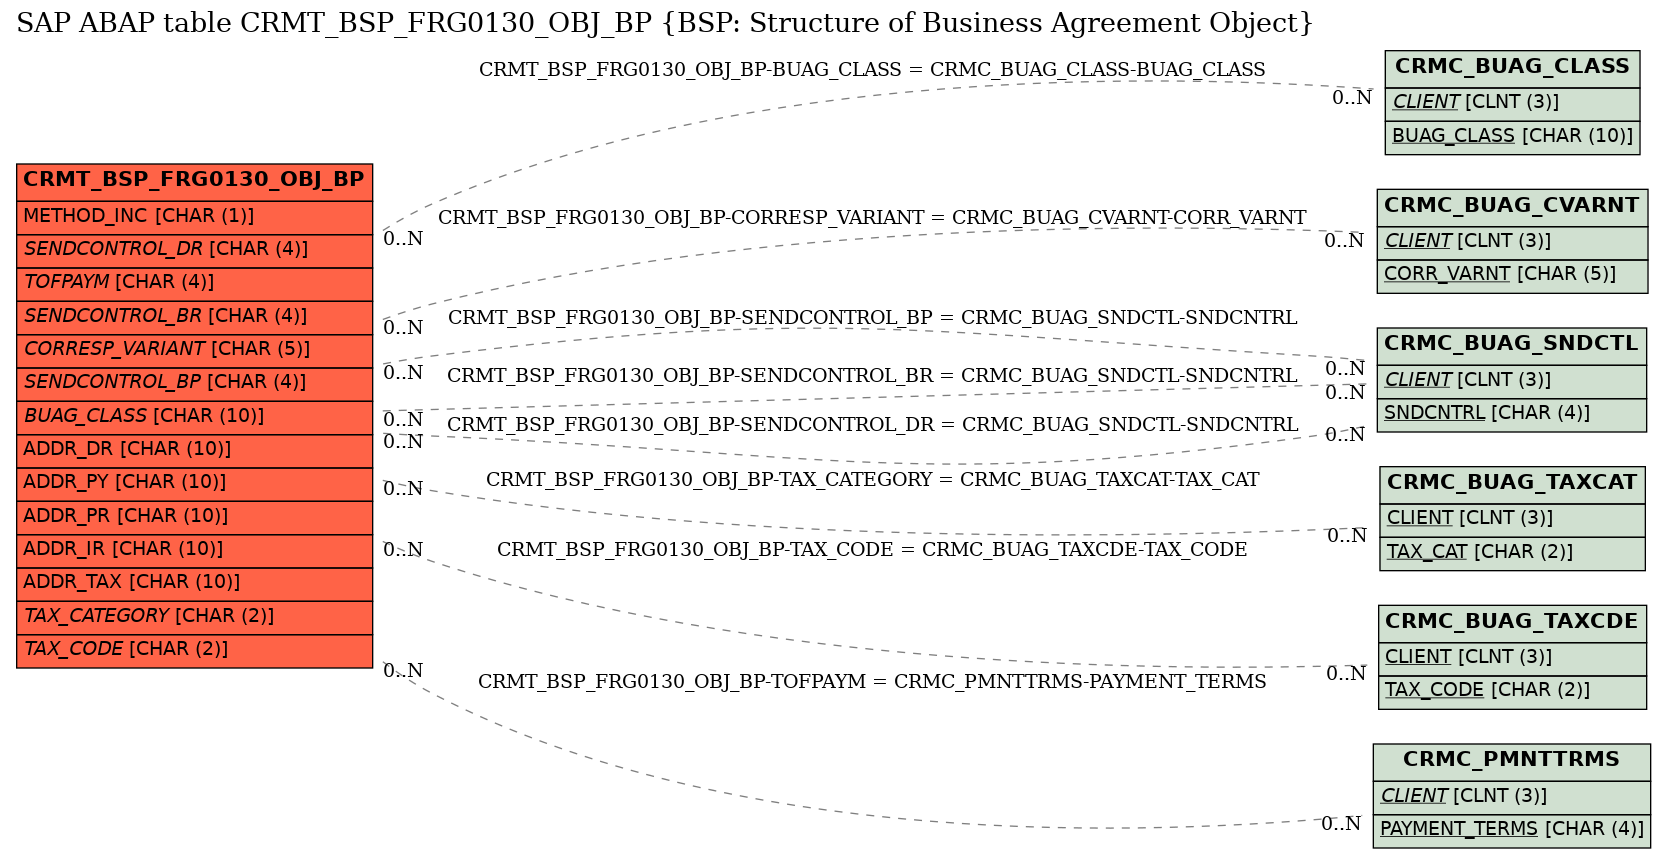 E-R Diagram for table CRMT_BSP_FRG0130_OBJ_BP (BSP: Structure of Business Agreement Object)